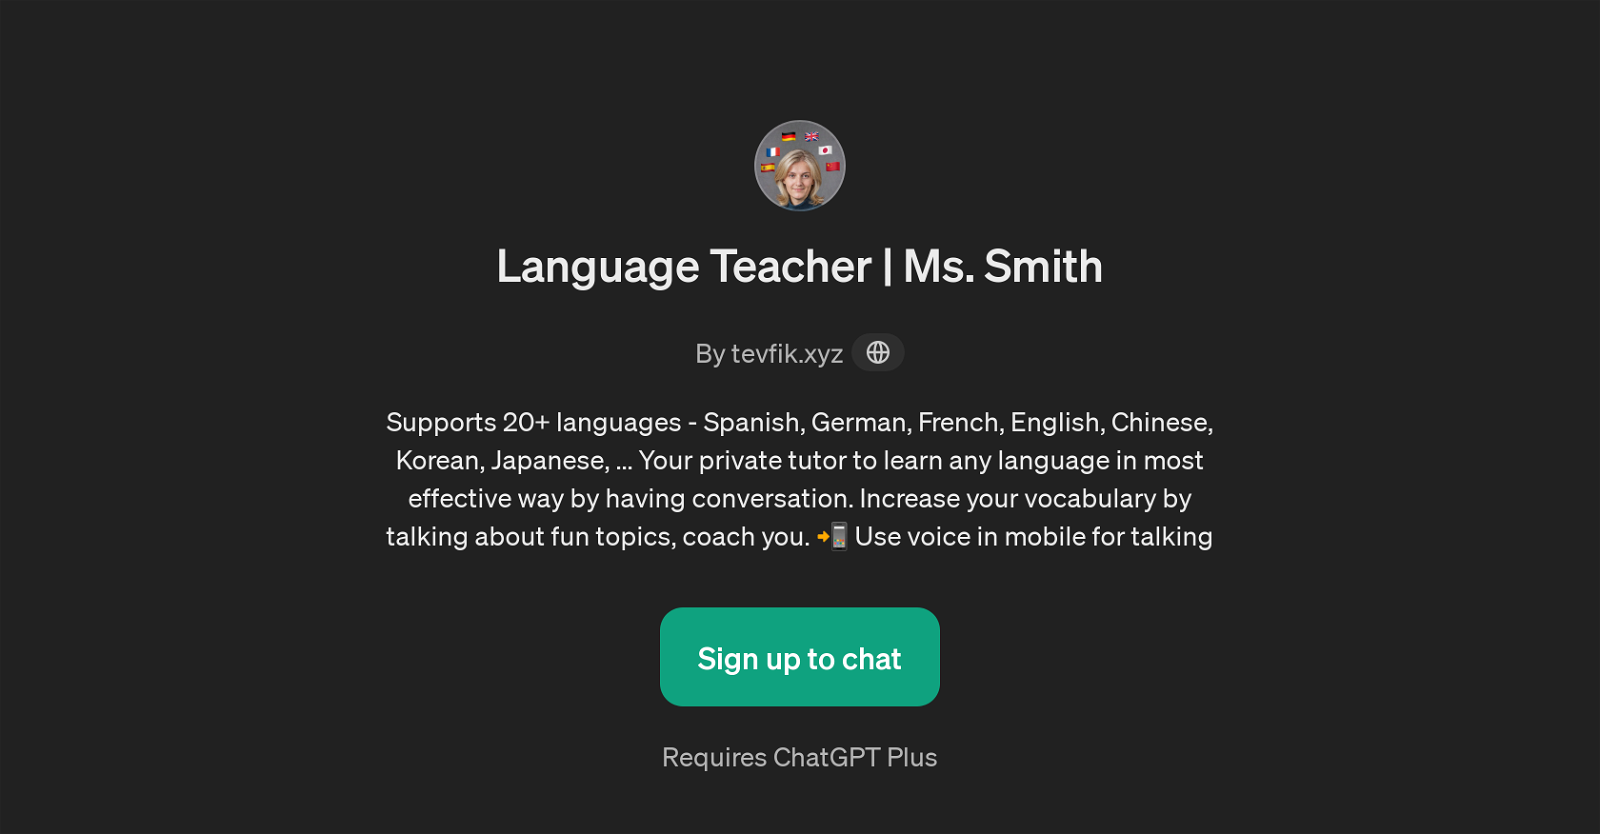 Language Teacher | Ms. Smith website